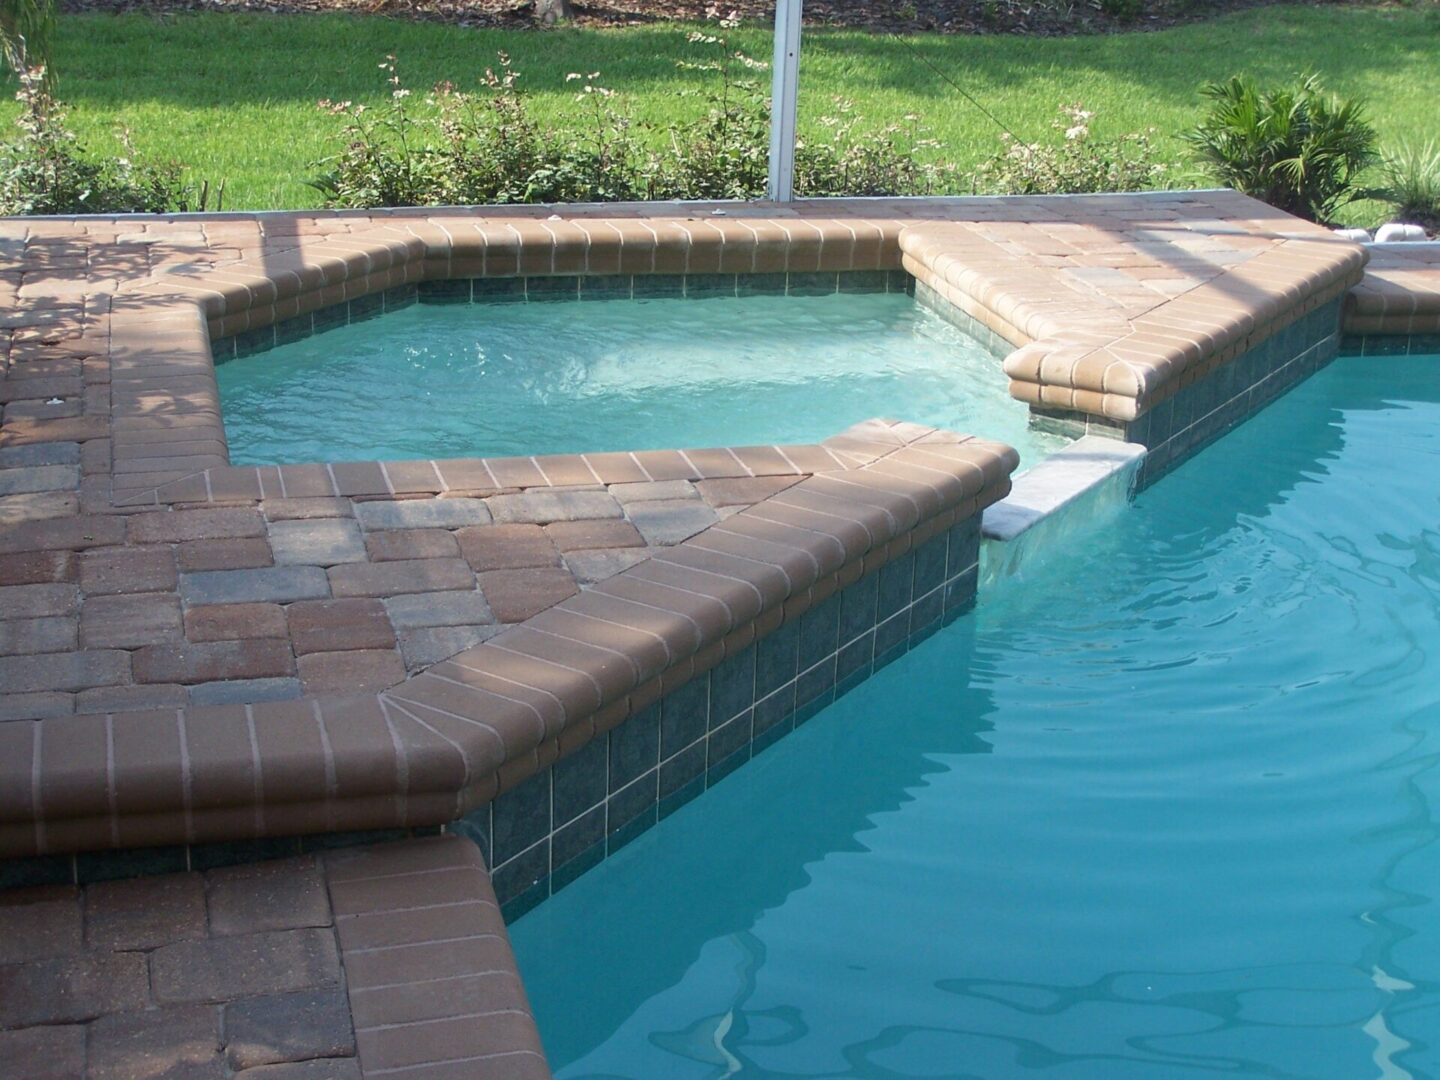 Tan brick pavers pool deck next to hot tub and pool